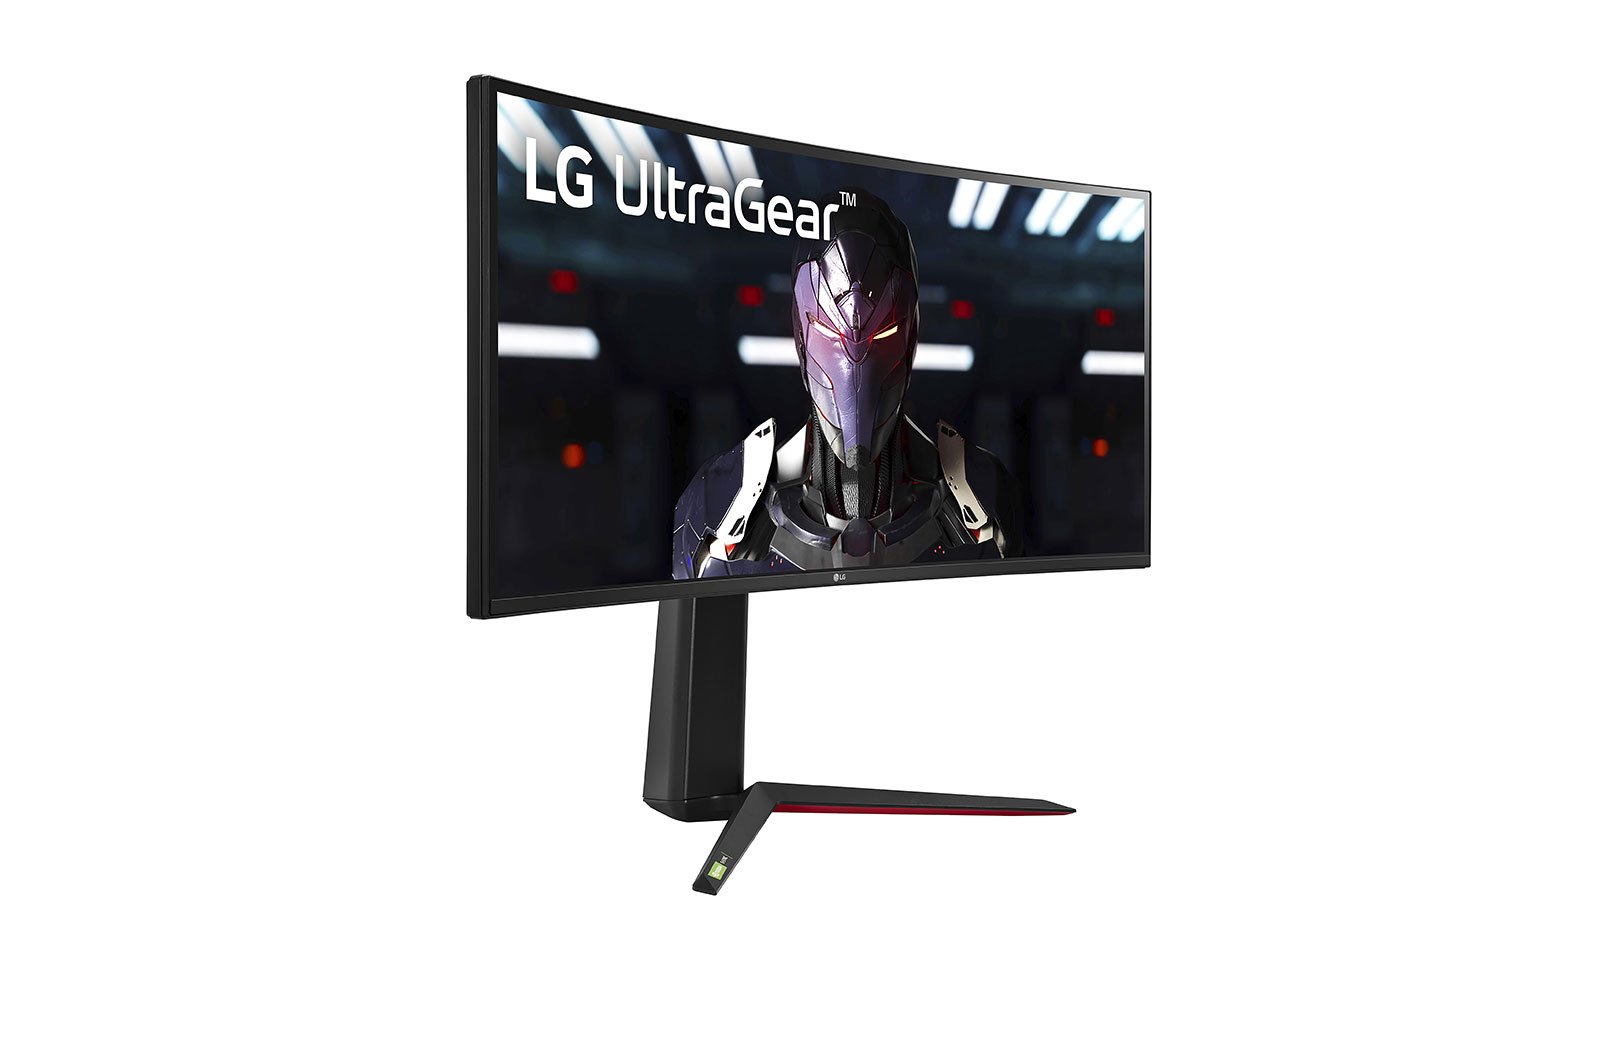 LG 34PG83-A UltraGear monitor